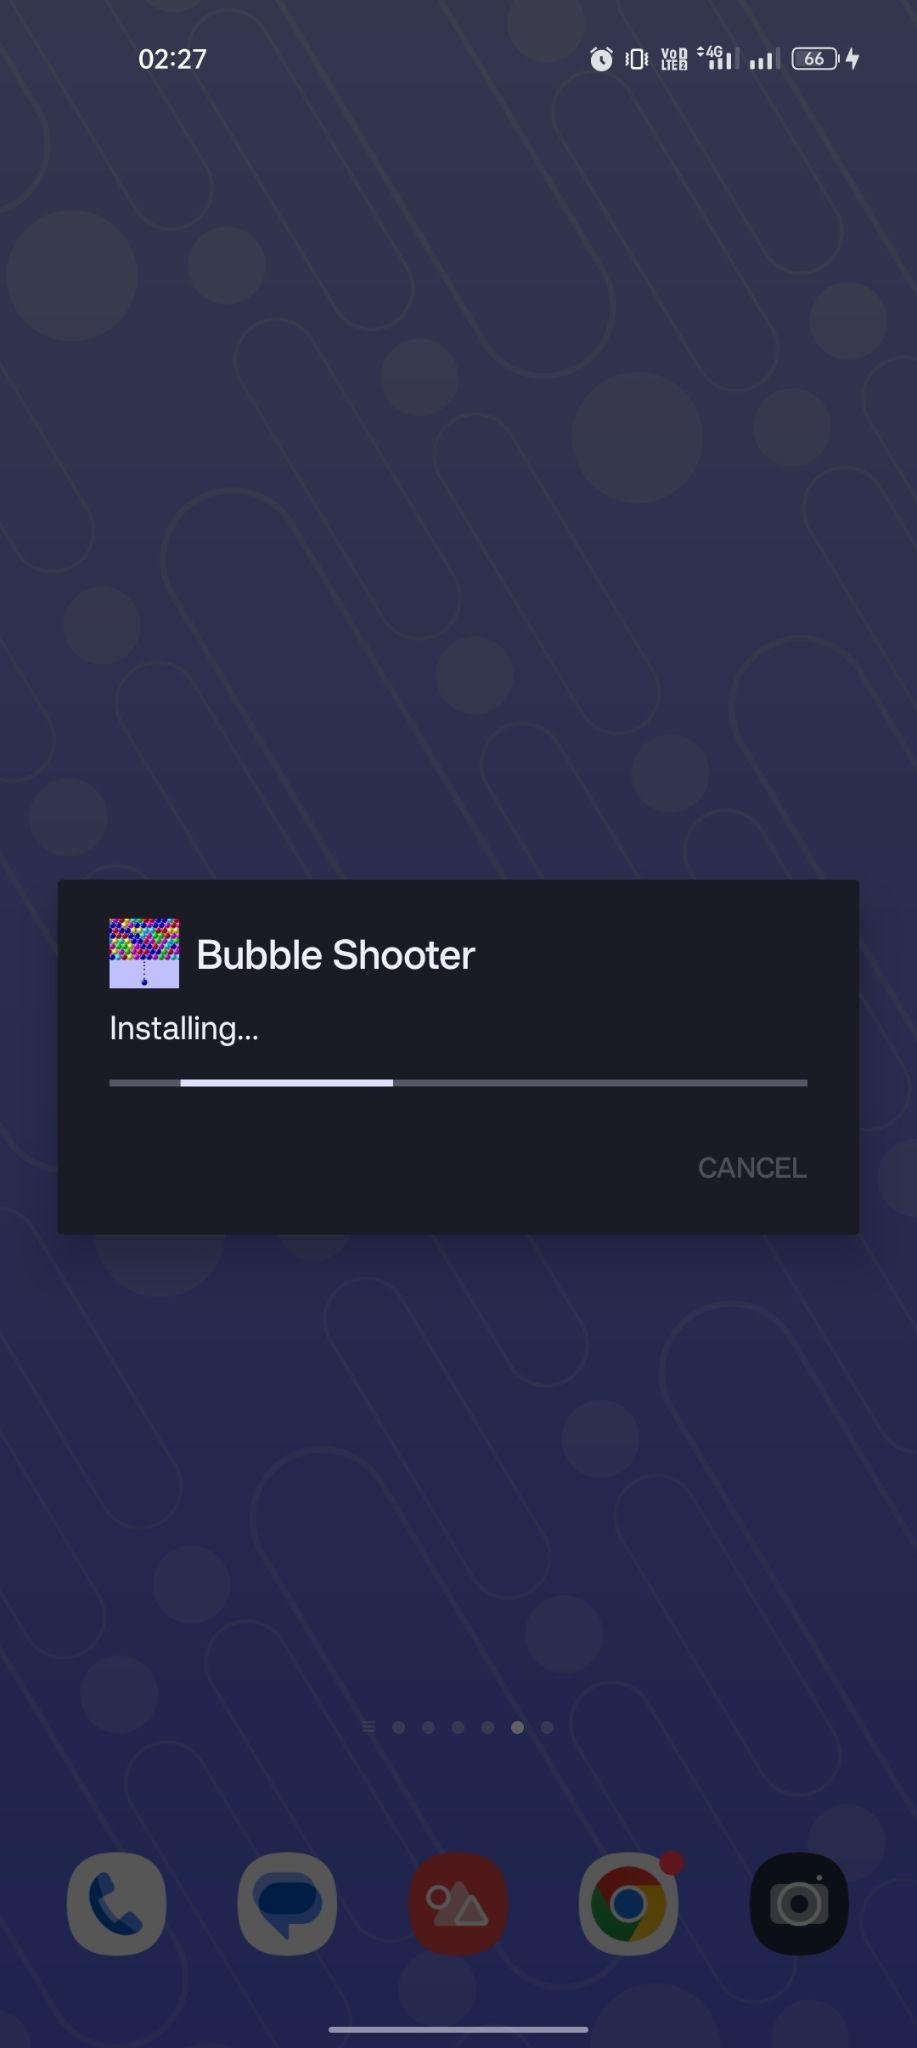 Bubble Shooter apk installing